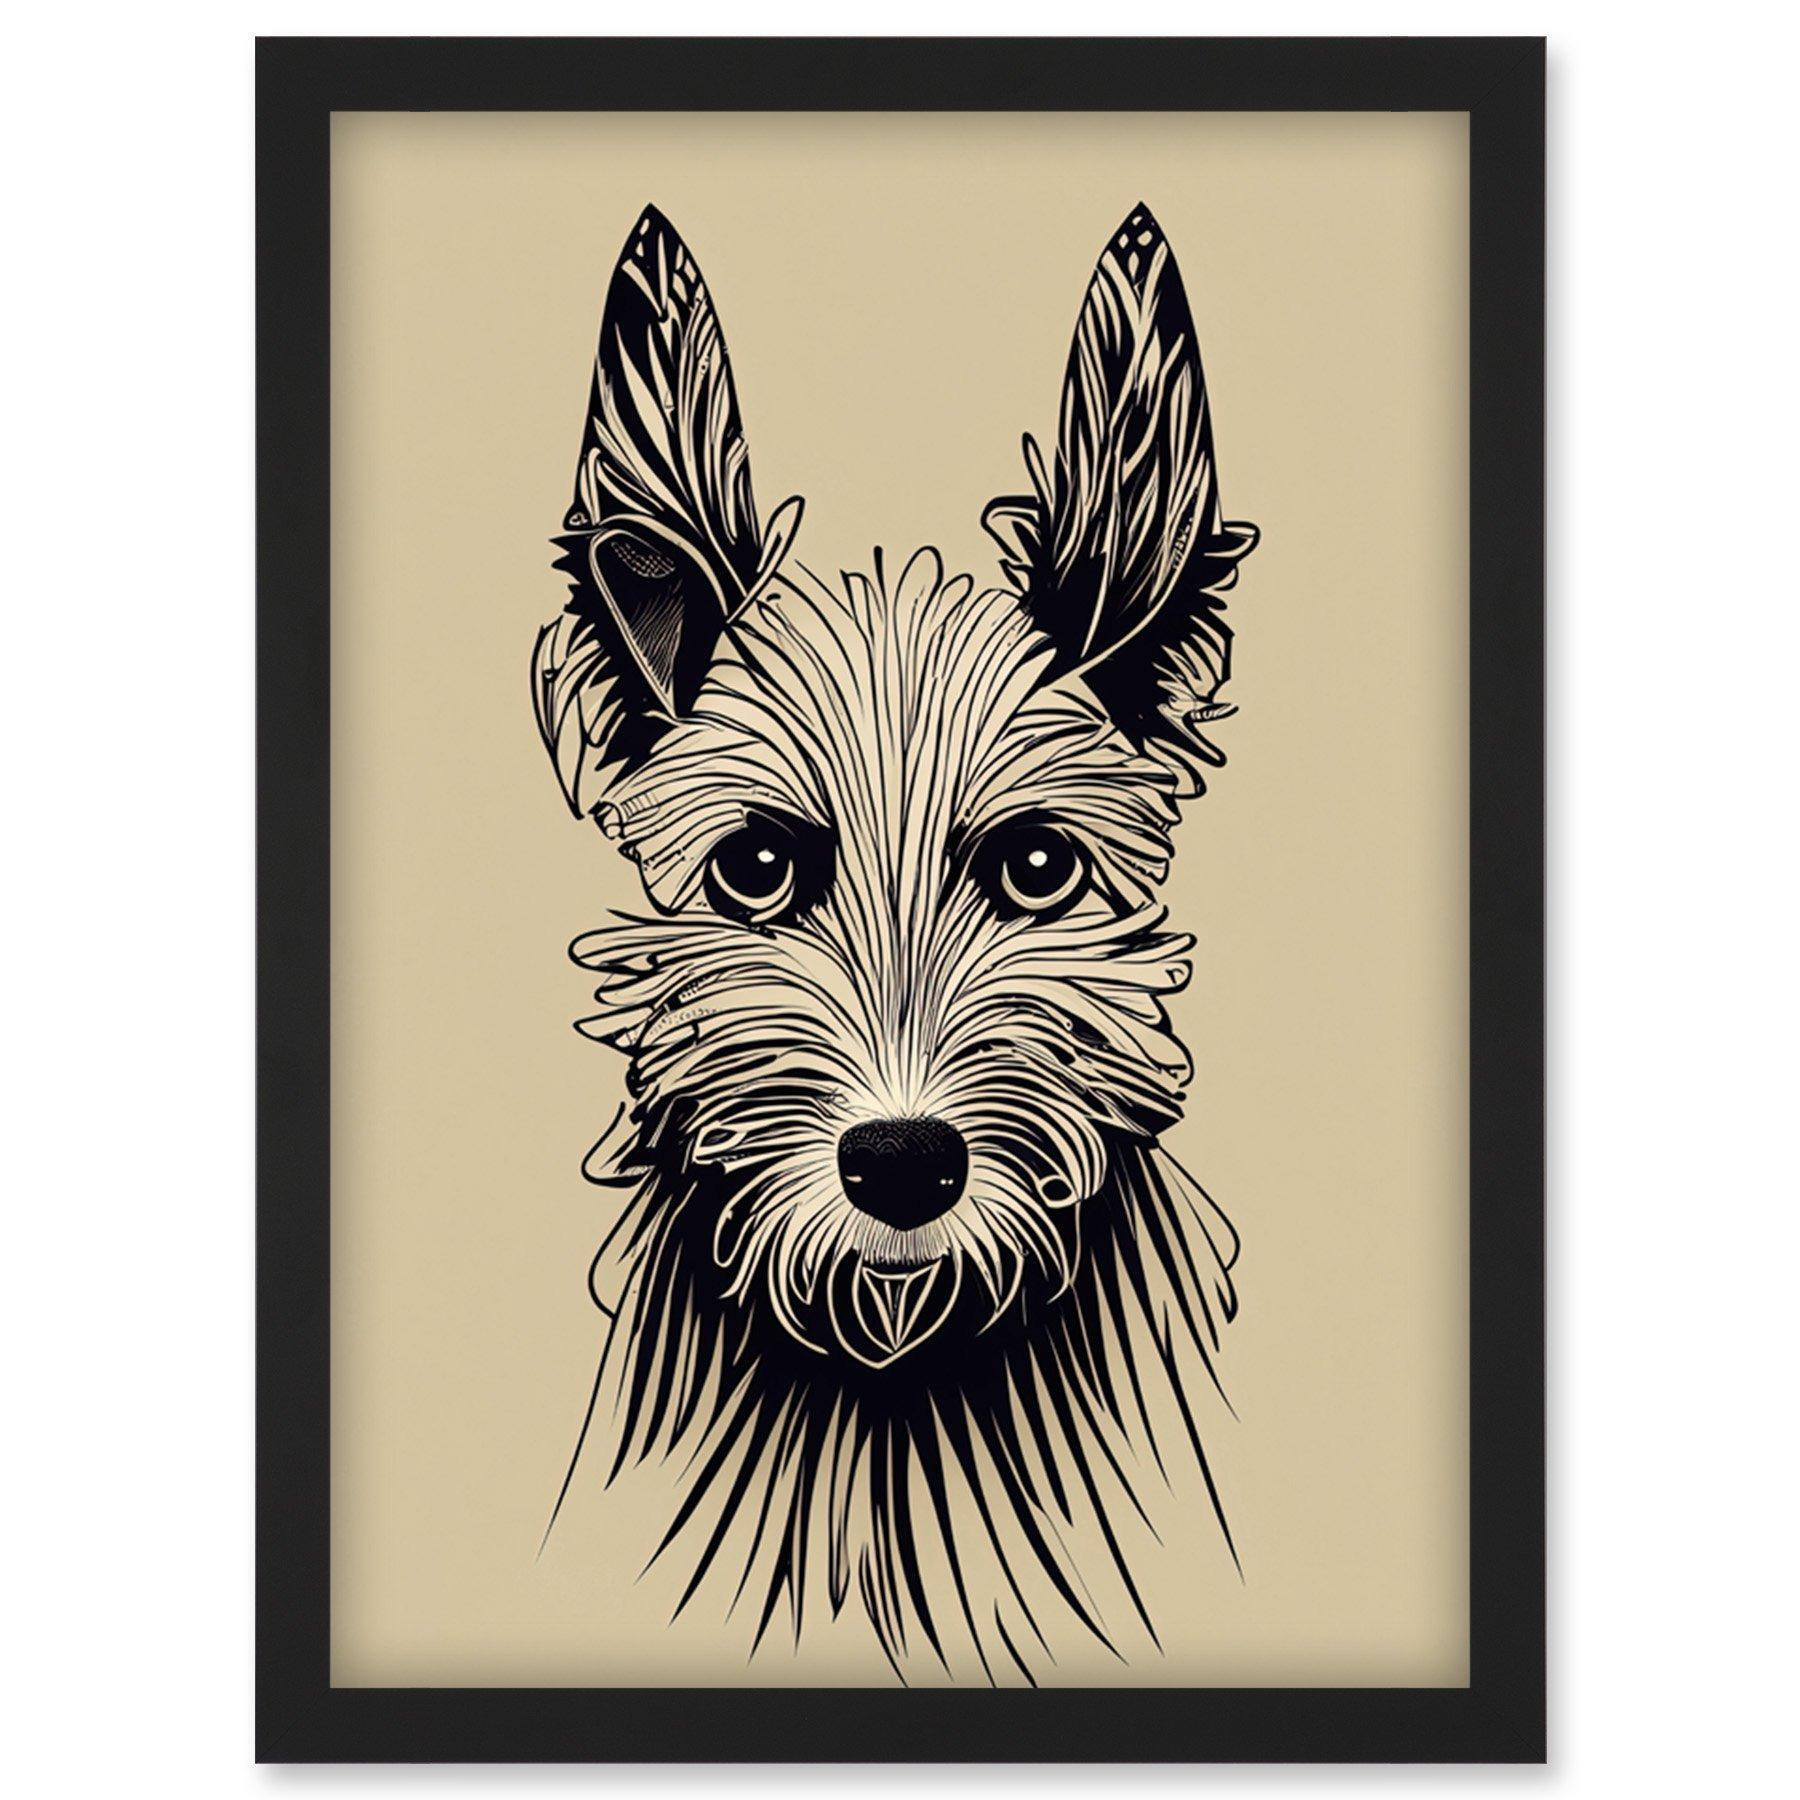 Portrait Of A Terrier Dog Cute Illustration On Tan Artwork Framed Wall Art Print A4 - image 1